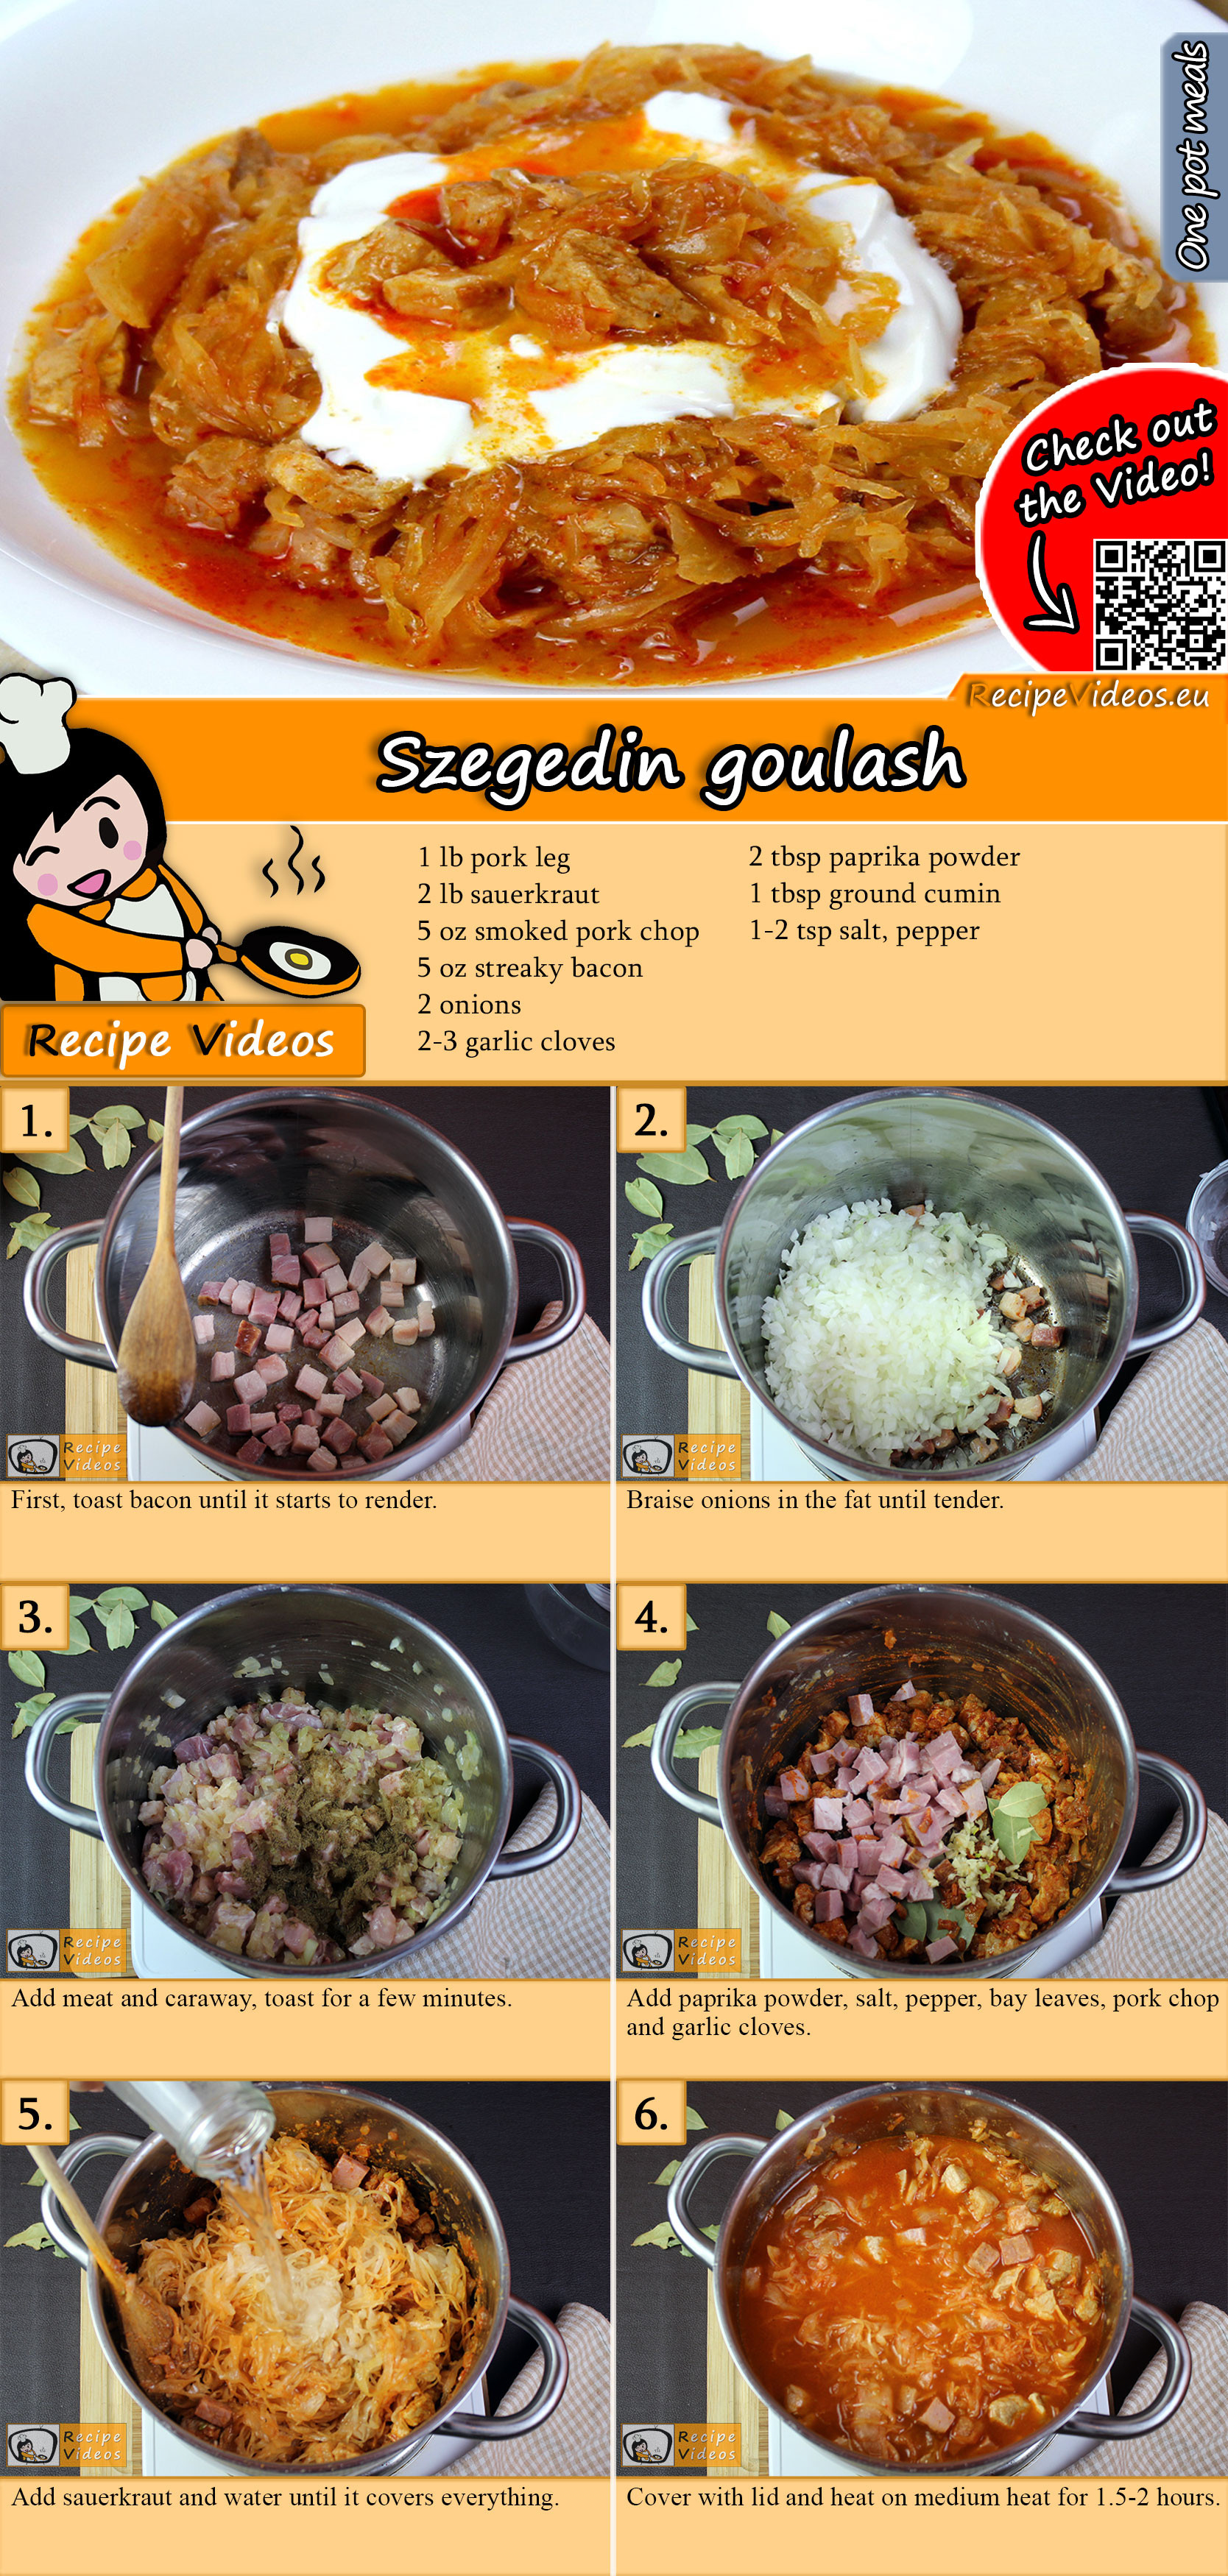 Szegedin goulash recipe with video